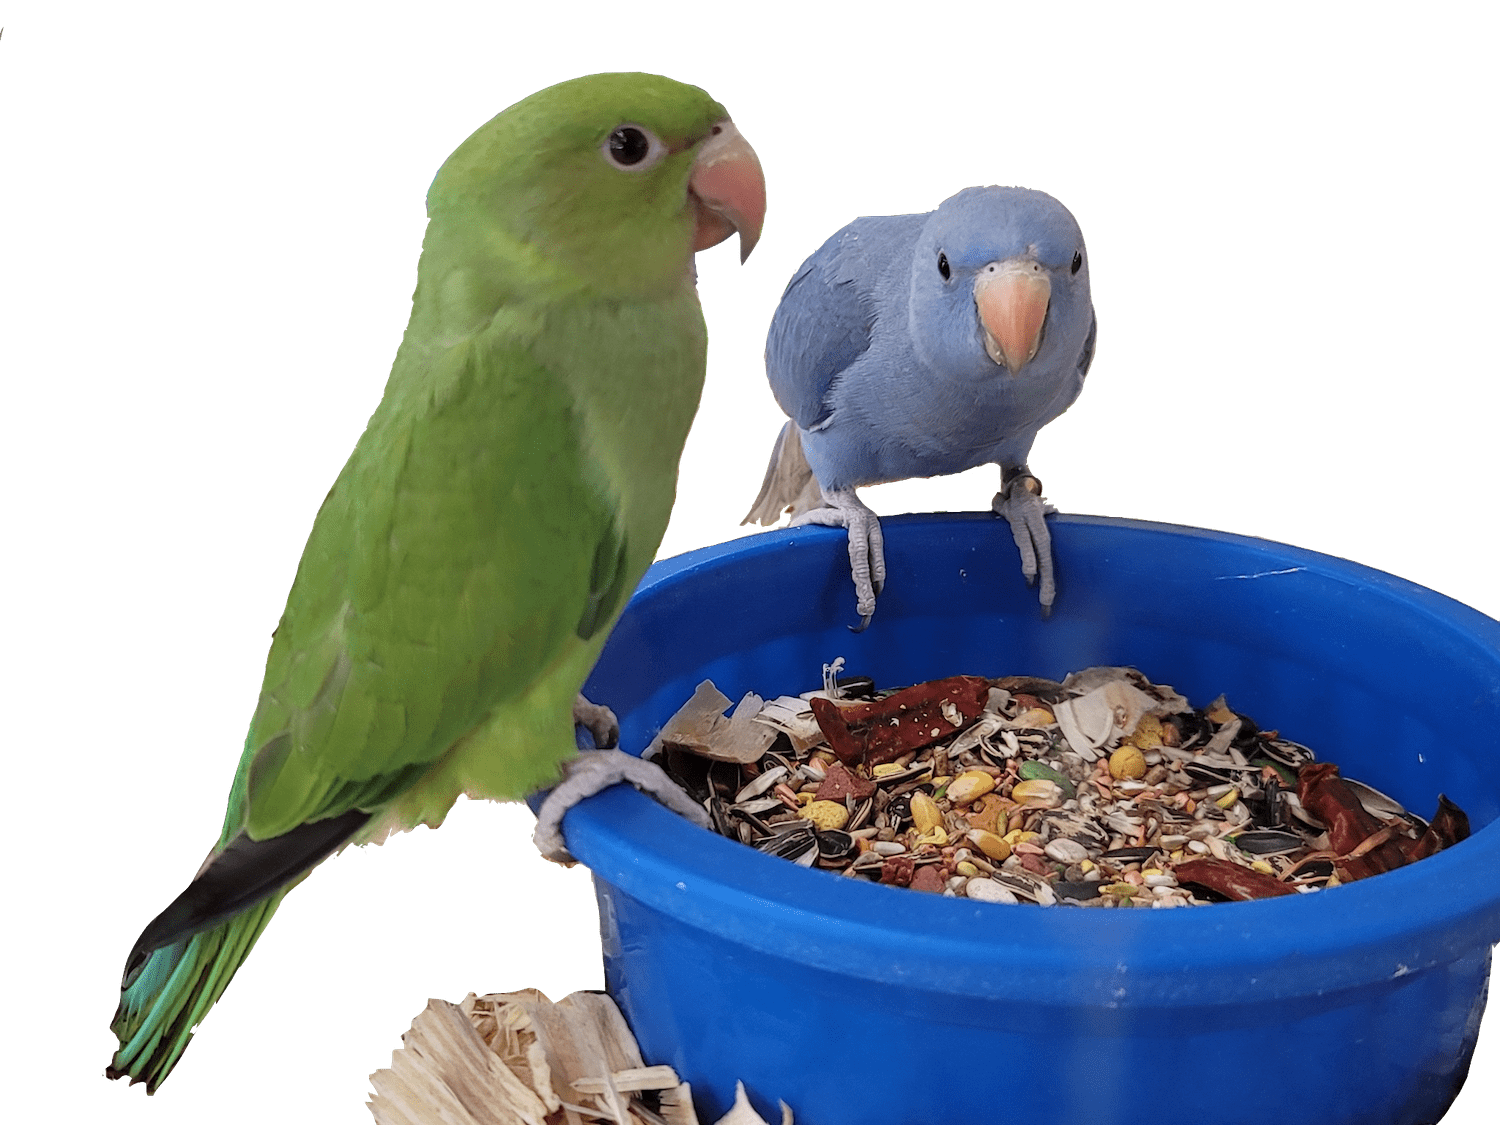 birds on a feed dish